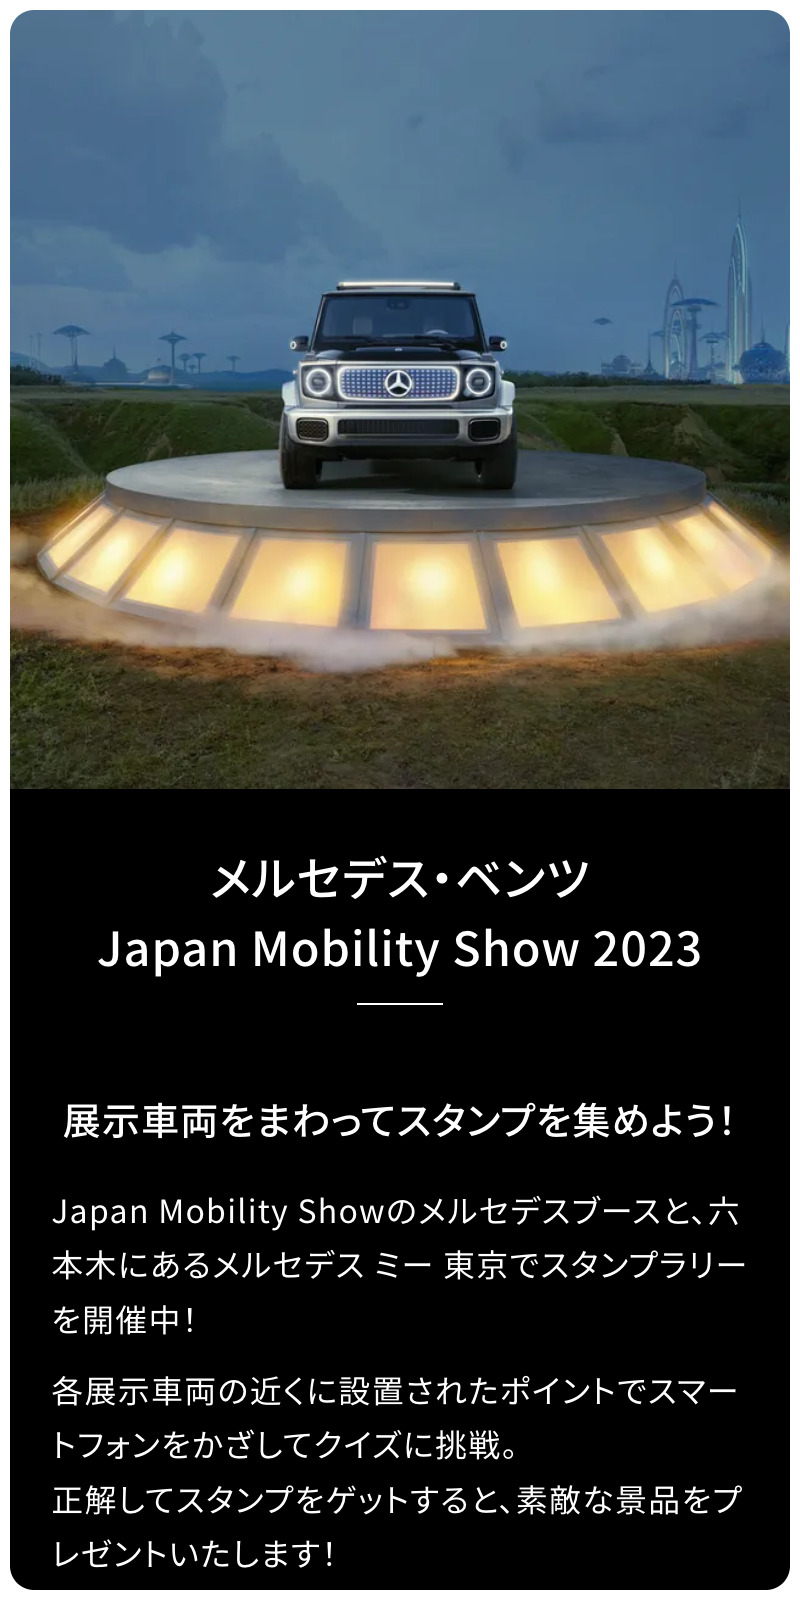 Japan Mobility Show 2023 ラリーのスクリーンショット 1